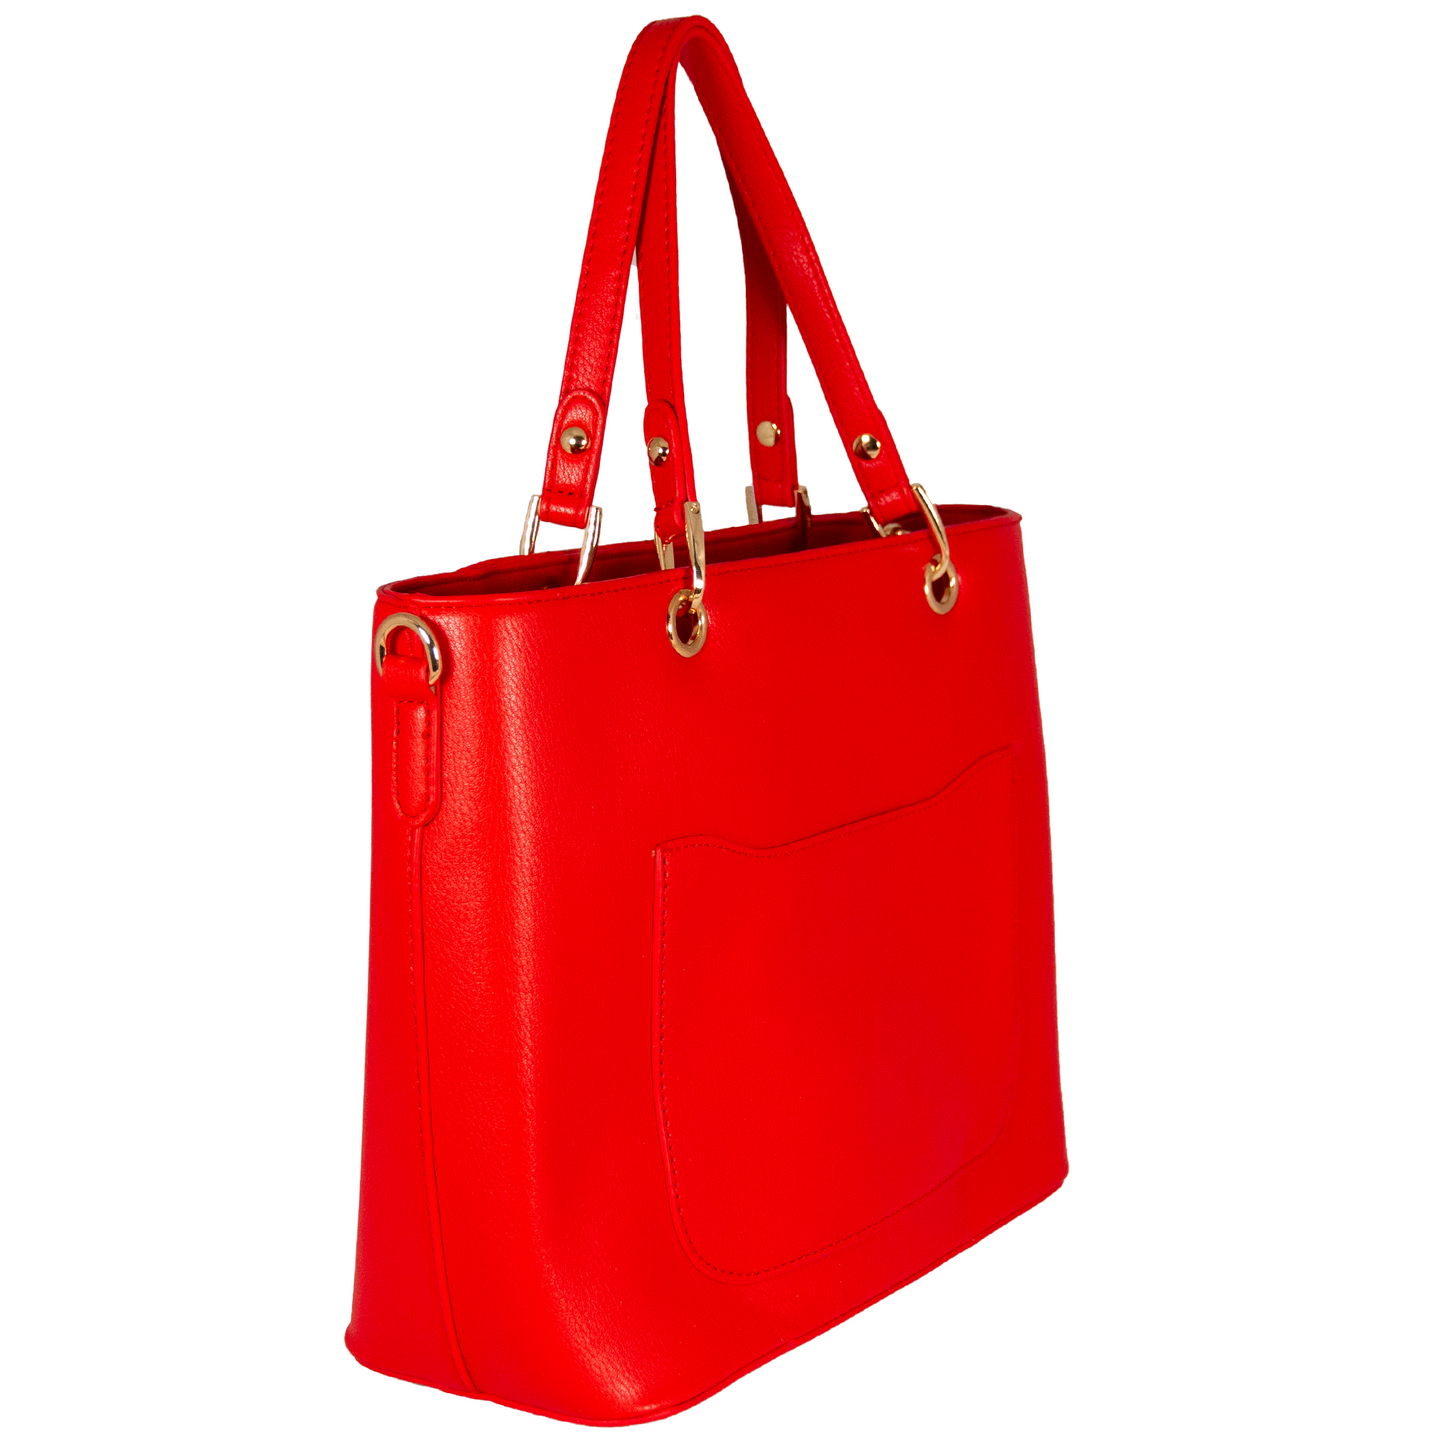 E7FW Women’s Charm Tote Bag - Red